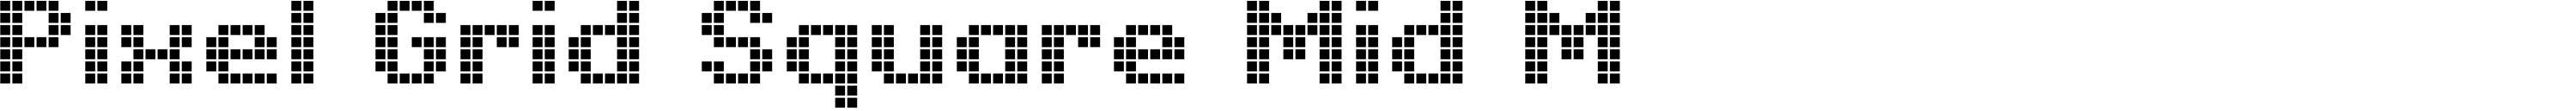 Pixel Grid Square Mid M